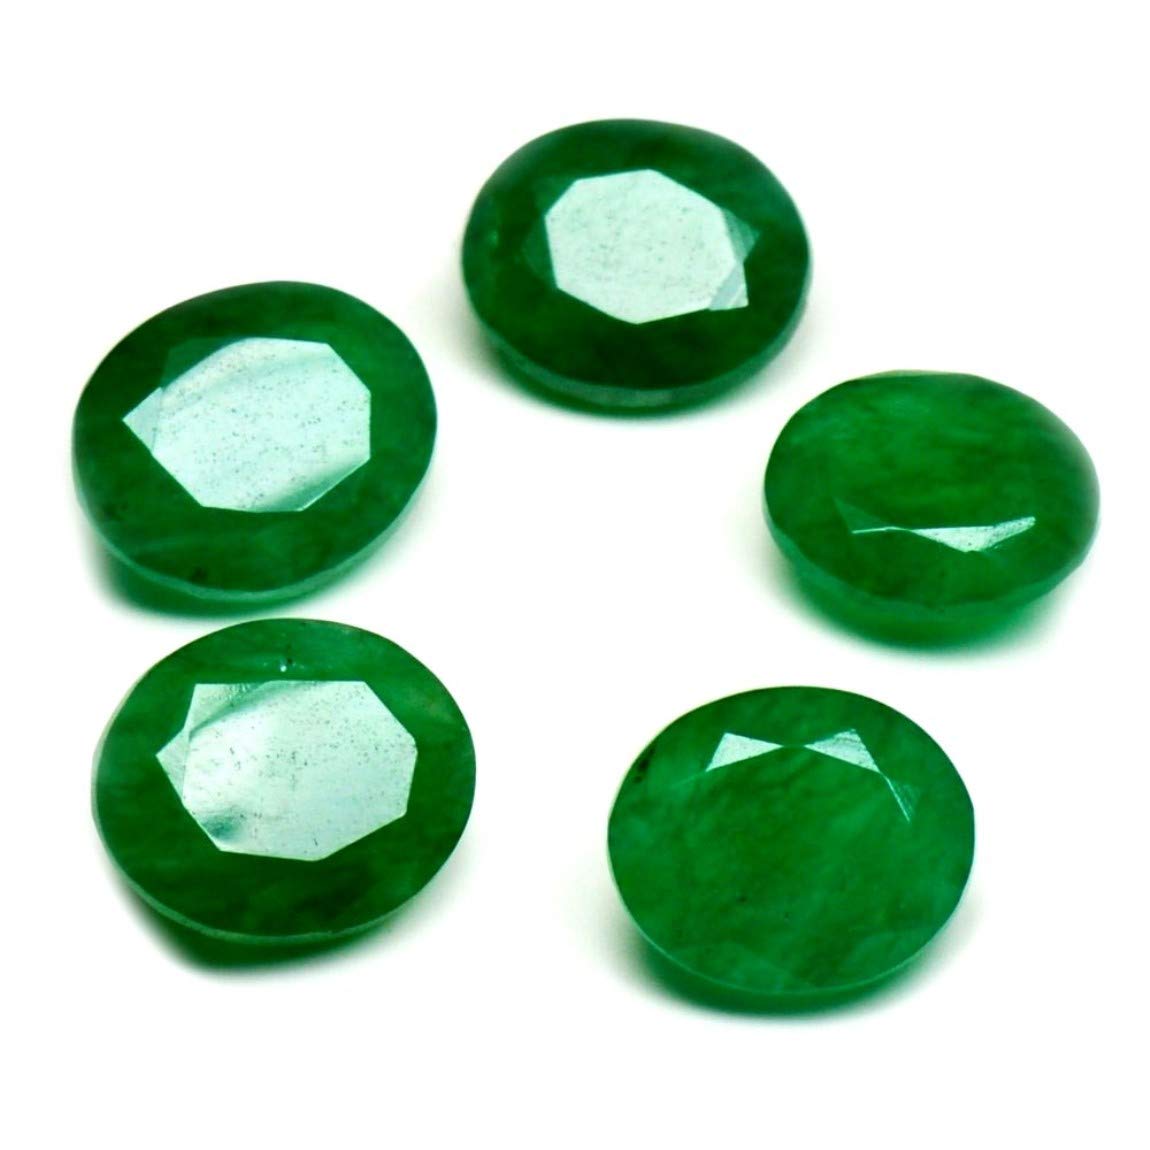 Buy Emerald (Panna) Gemstone Online at Best Price | Astrology Remedies Store